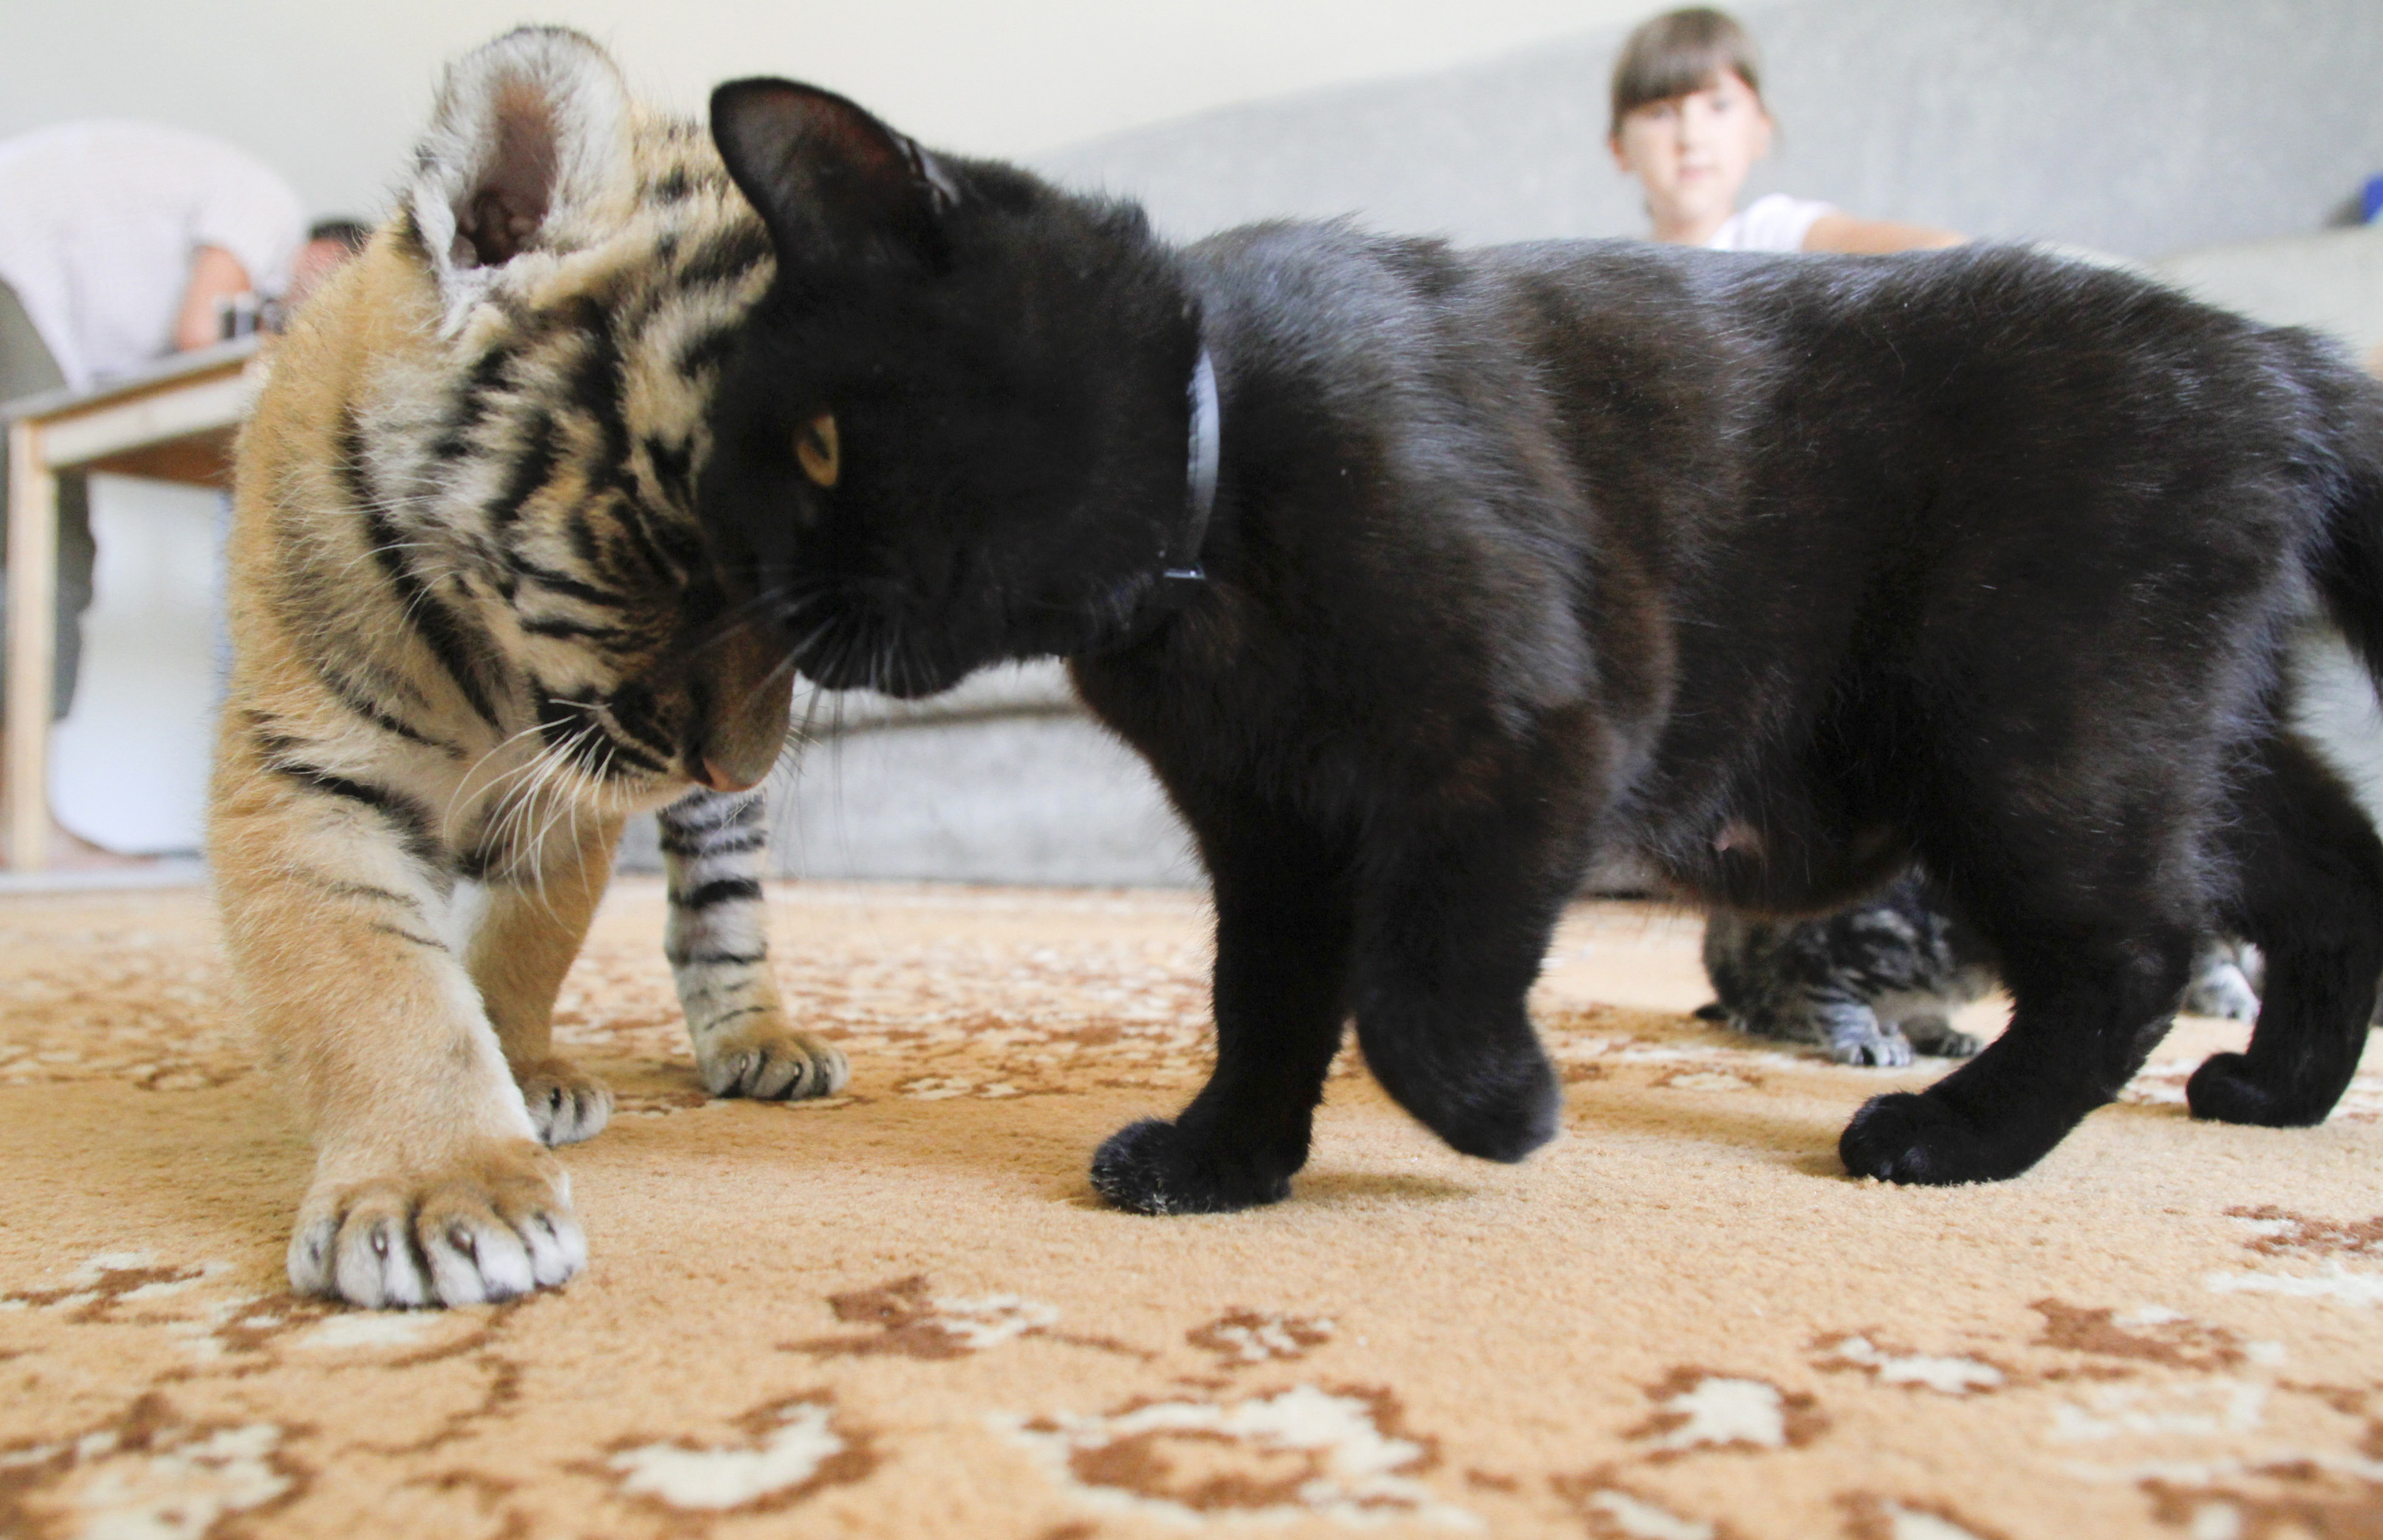 Tigerunge och kattunge, nästan samma. 